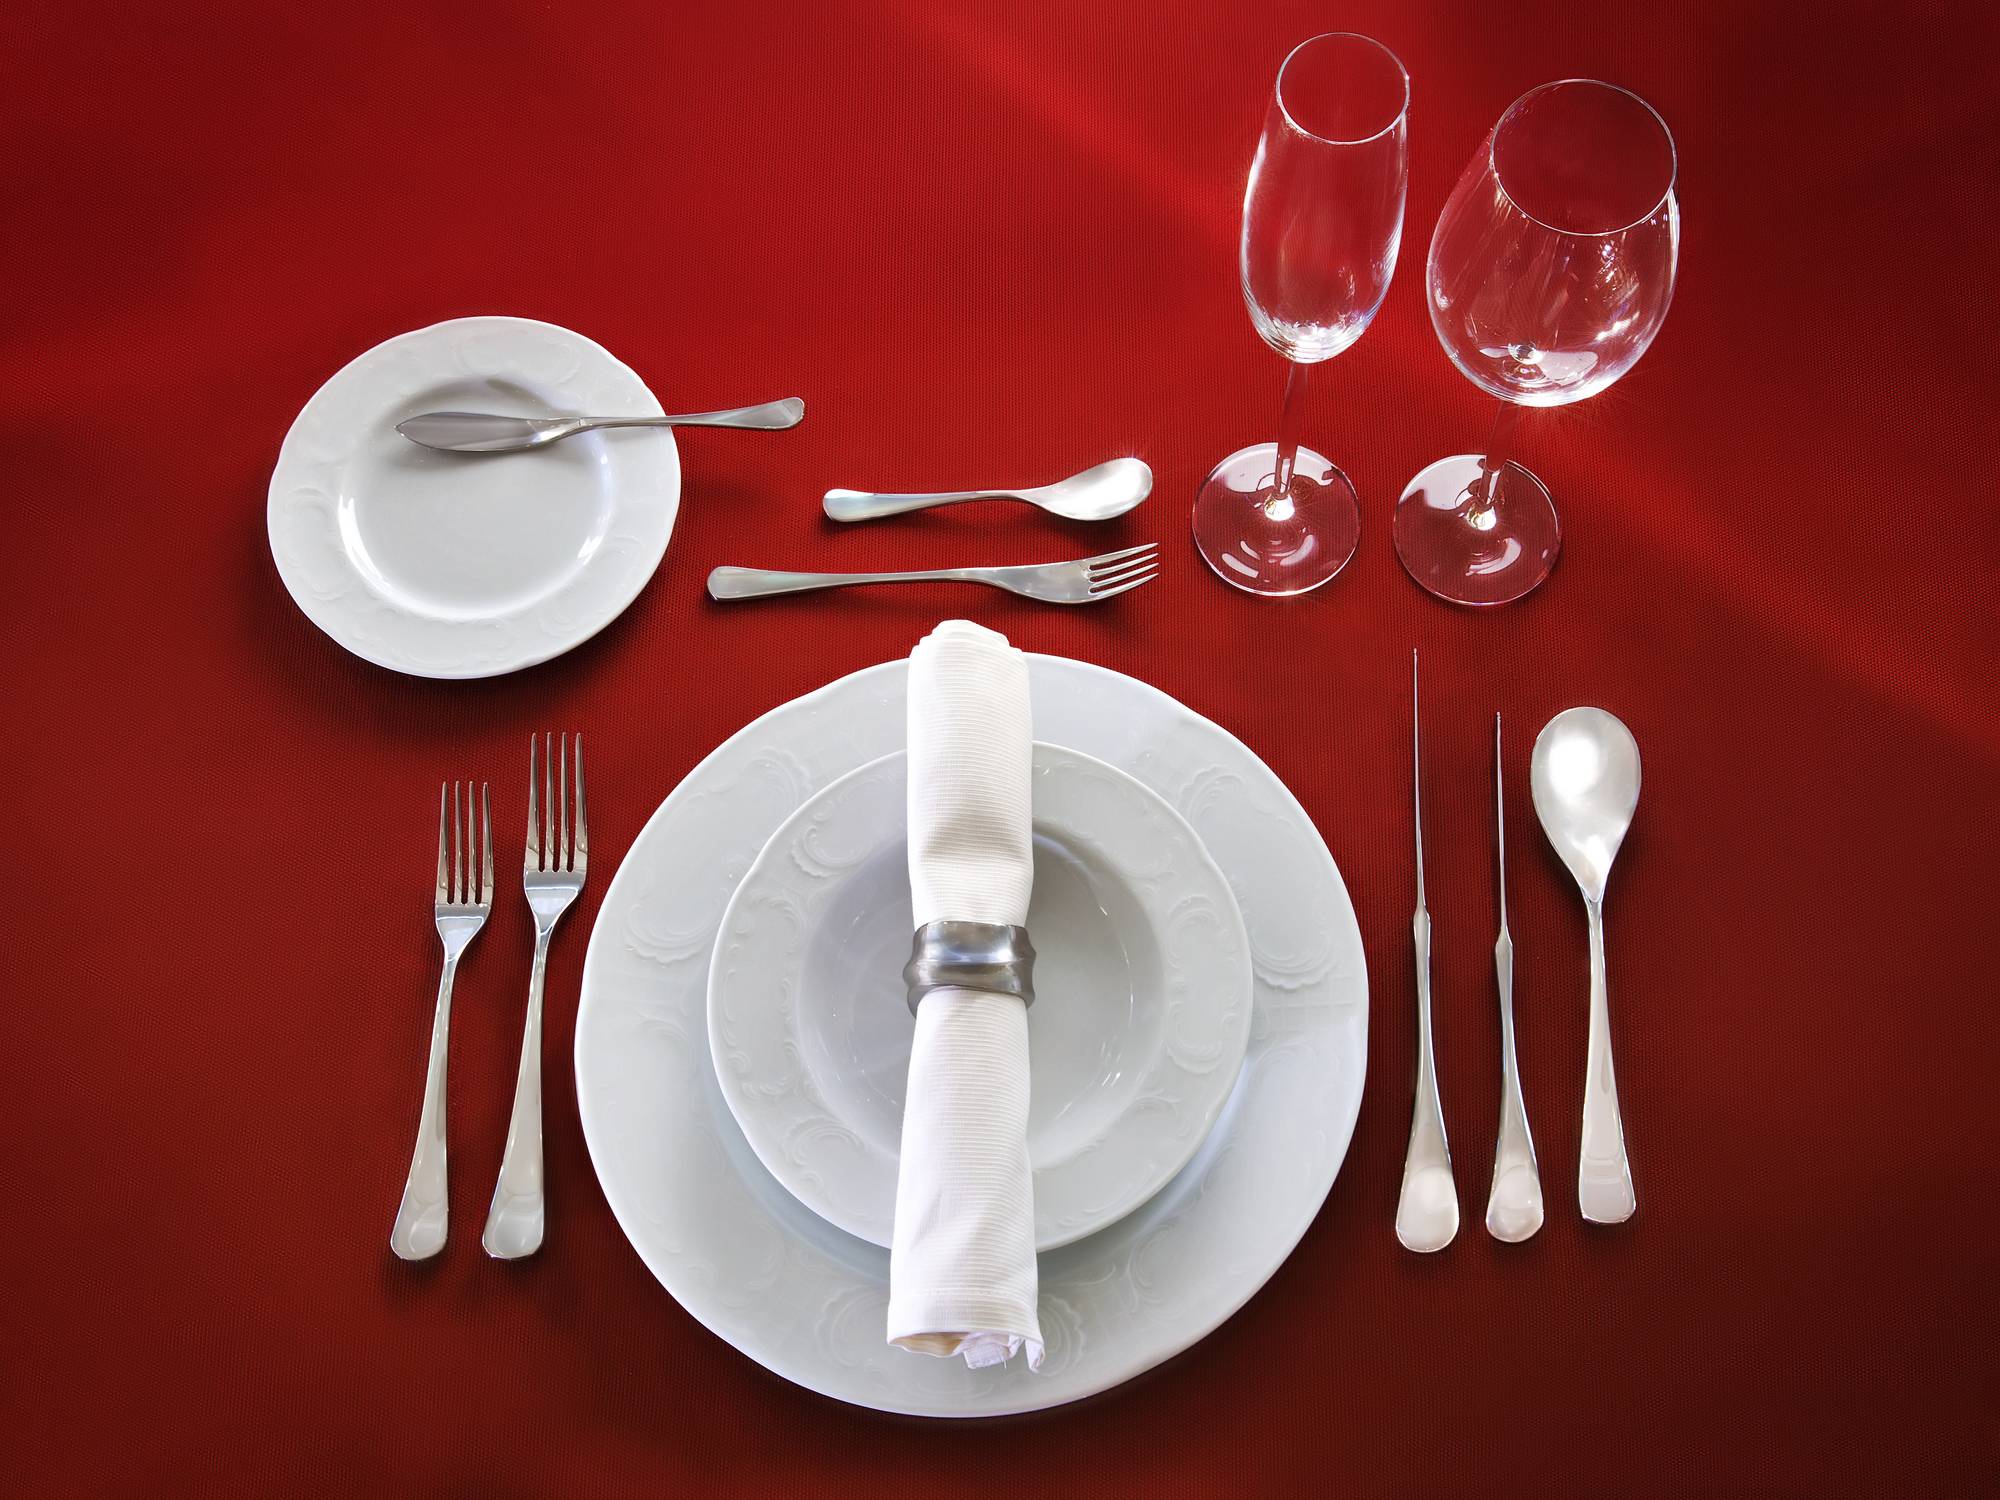 dining-etiquette-header-GettyImages-585093566-0001.jpg